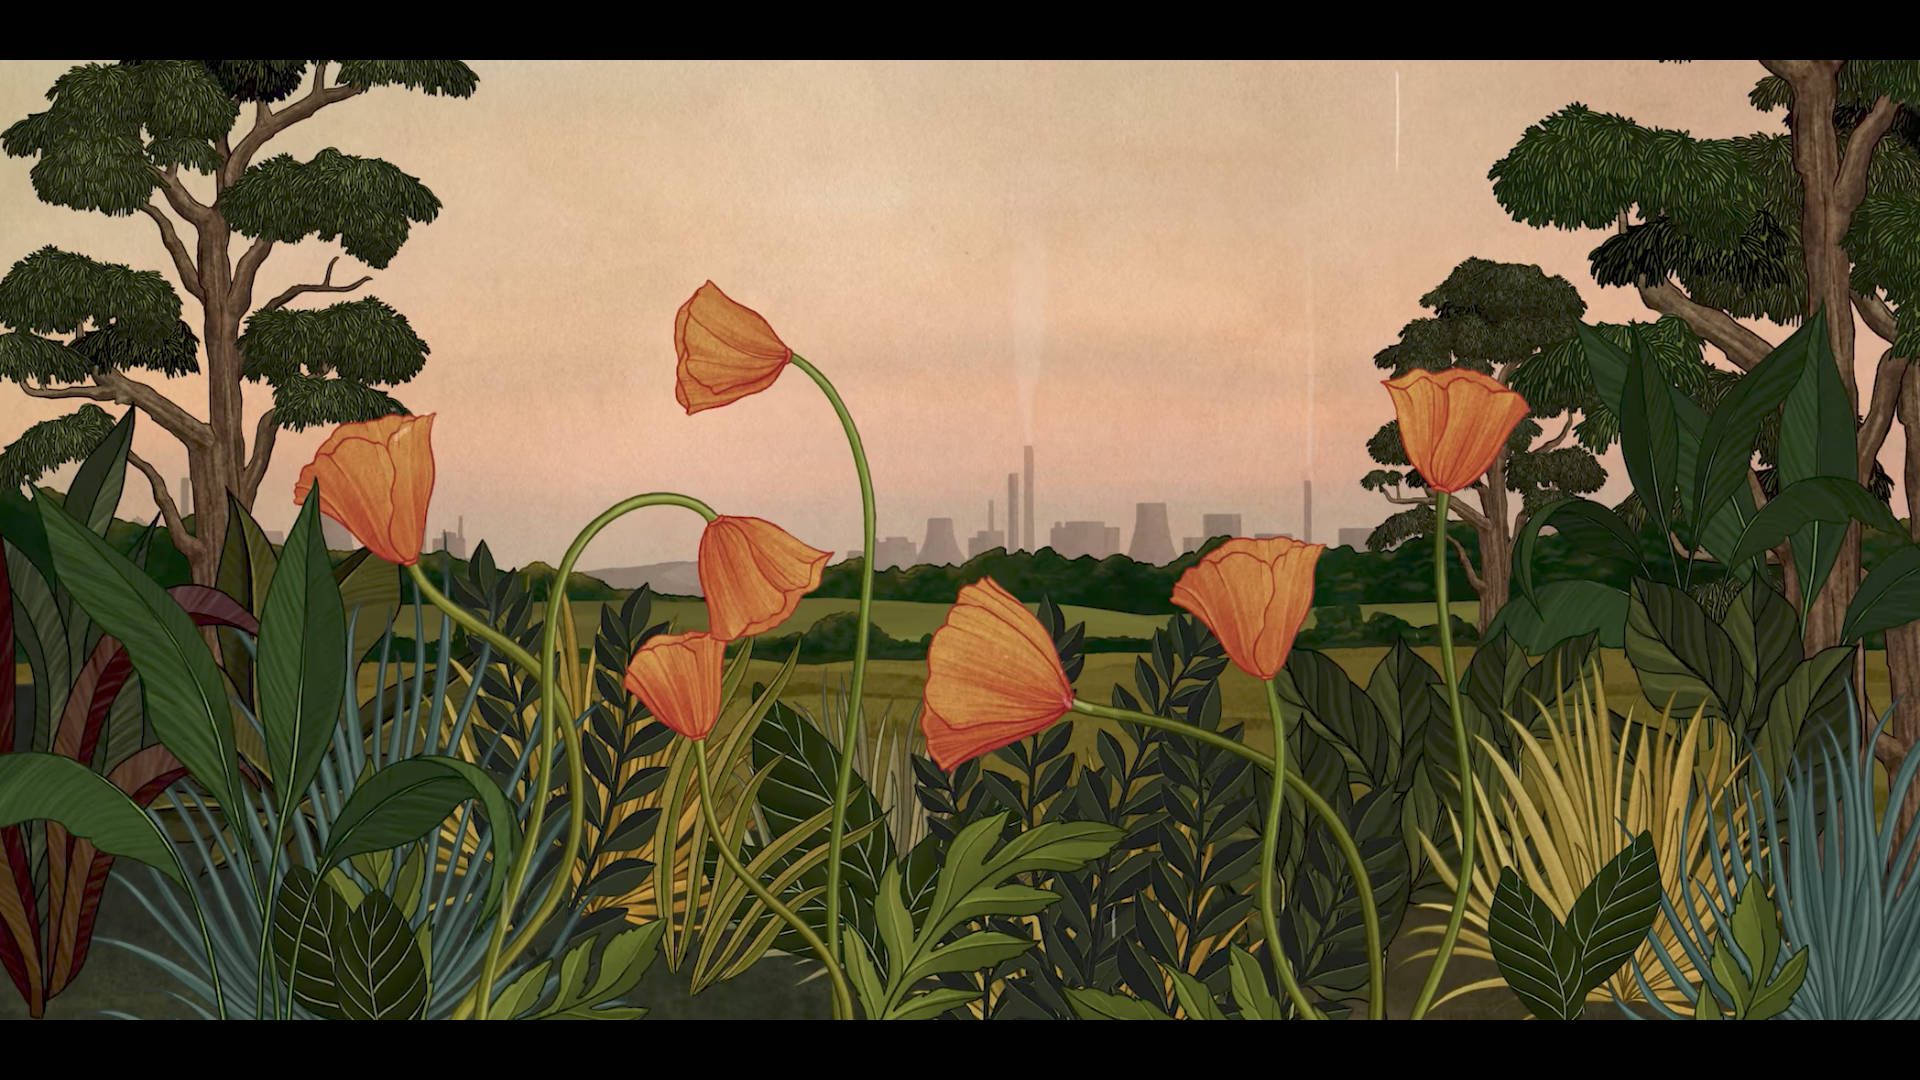 Aesthetic Art Story Of Flowers Background